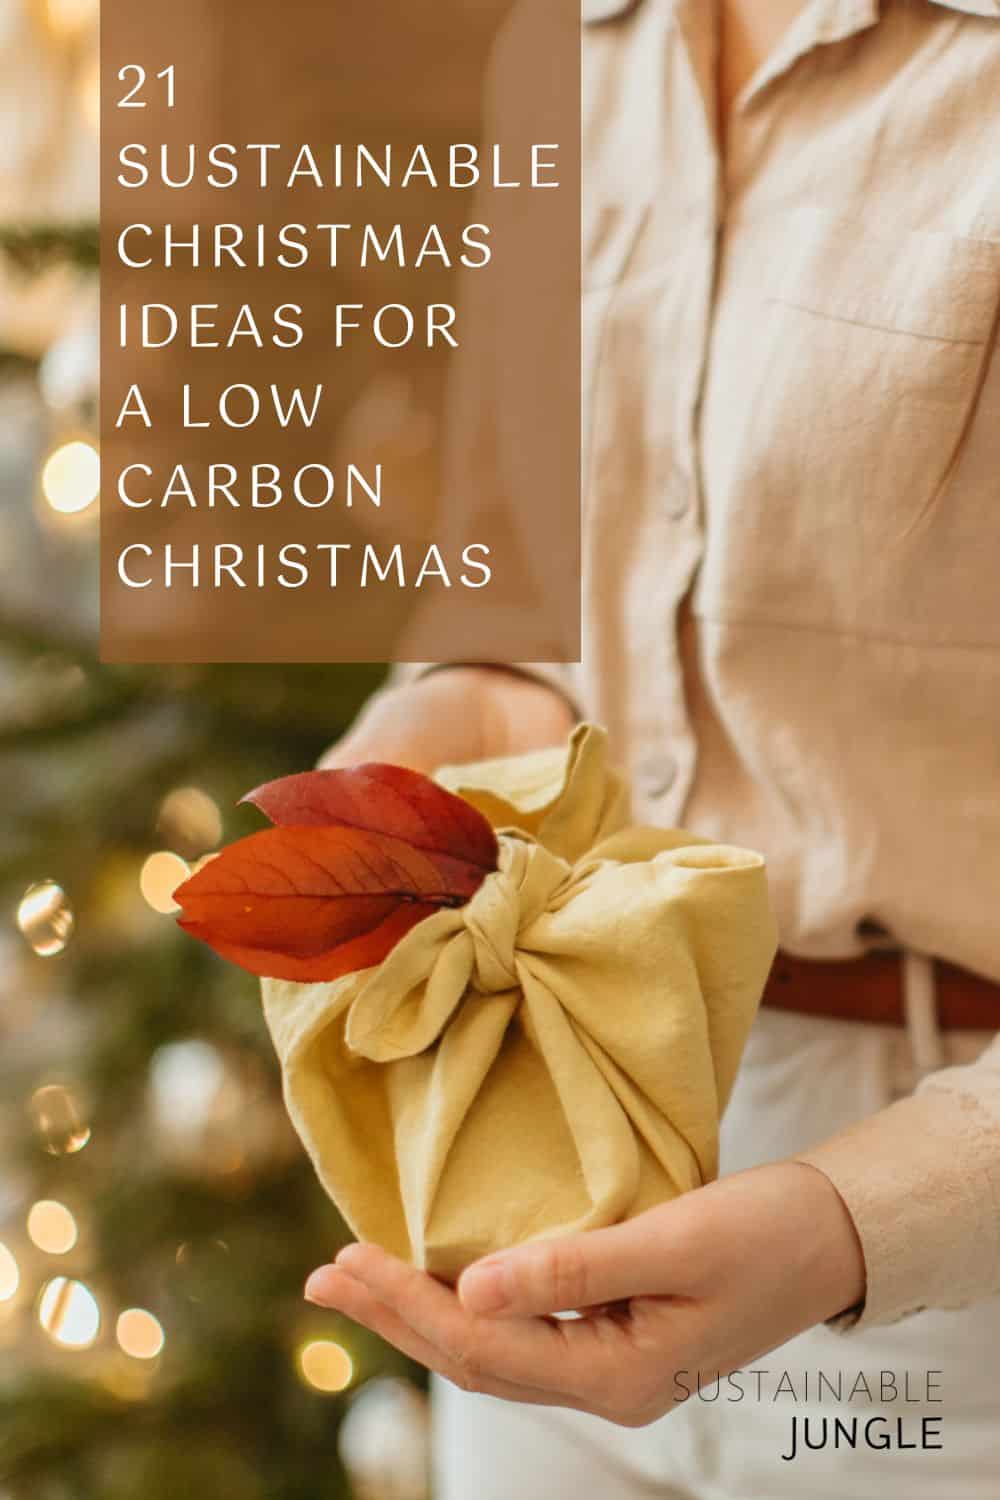 21 Sustainable Christmas Ideas For A Low Carbon Christmas Image by anastasia shuraeva #sustainablechristmas #ecofriendlychristmas #sustainablechristmasideas #howtohaveamoresustainablechristmas #tipsforanecofriendlychristmas #sustainablejungle